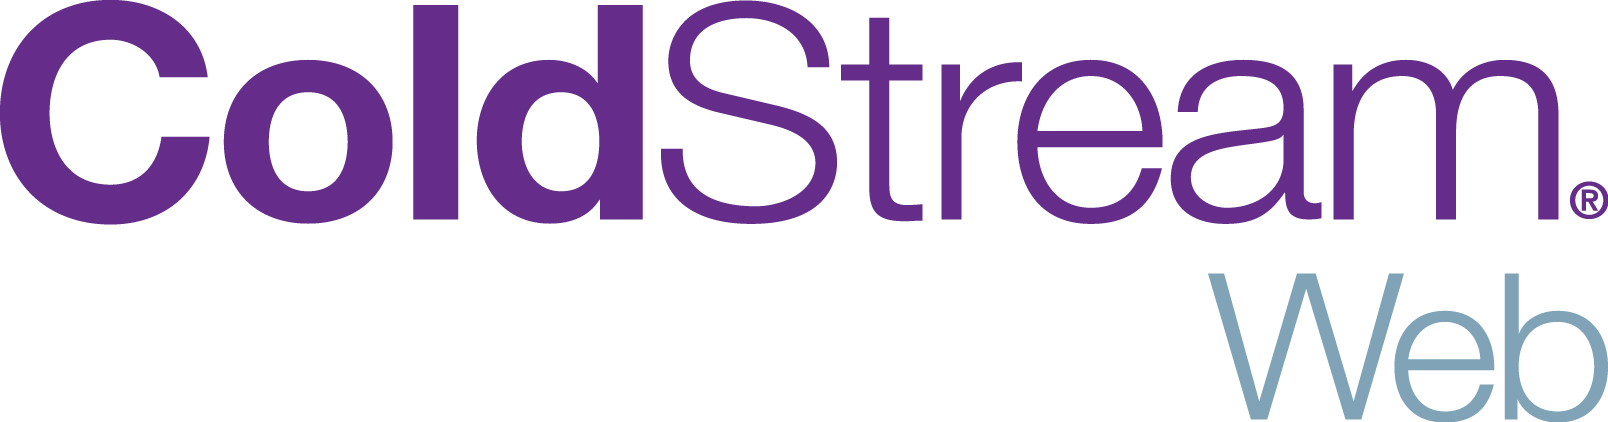 coldstream logo